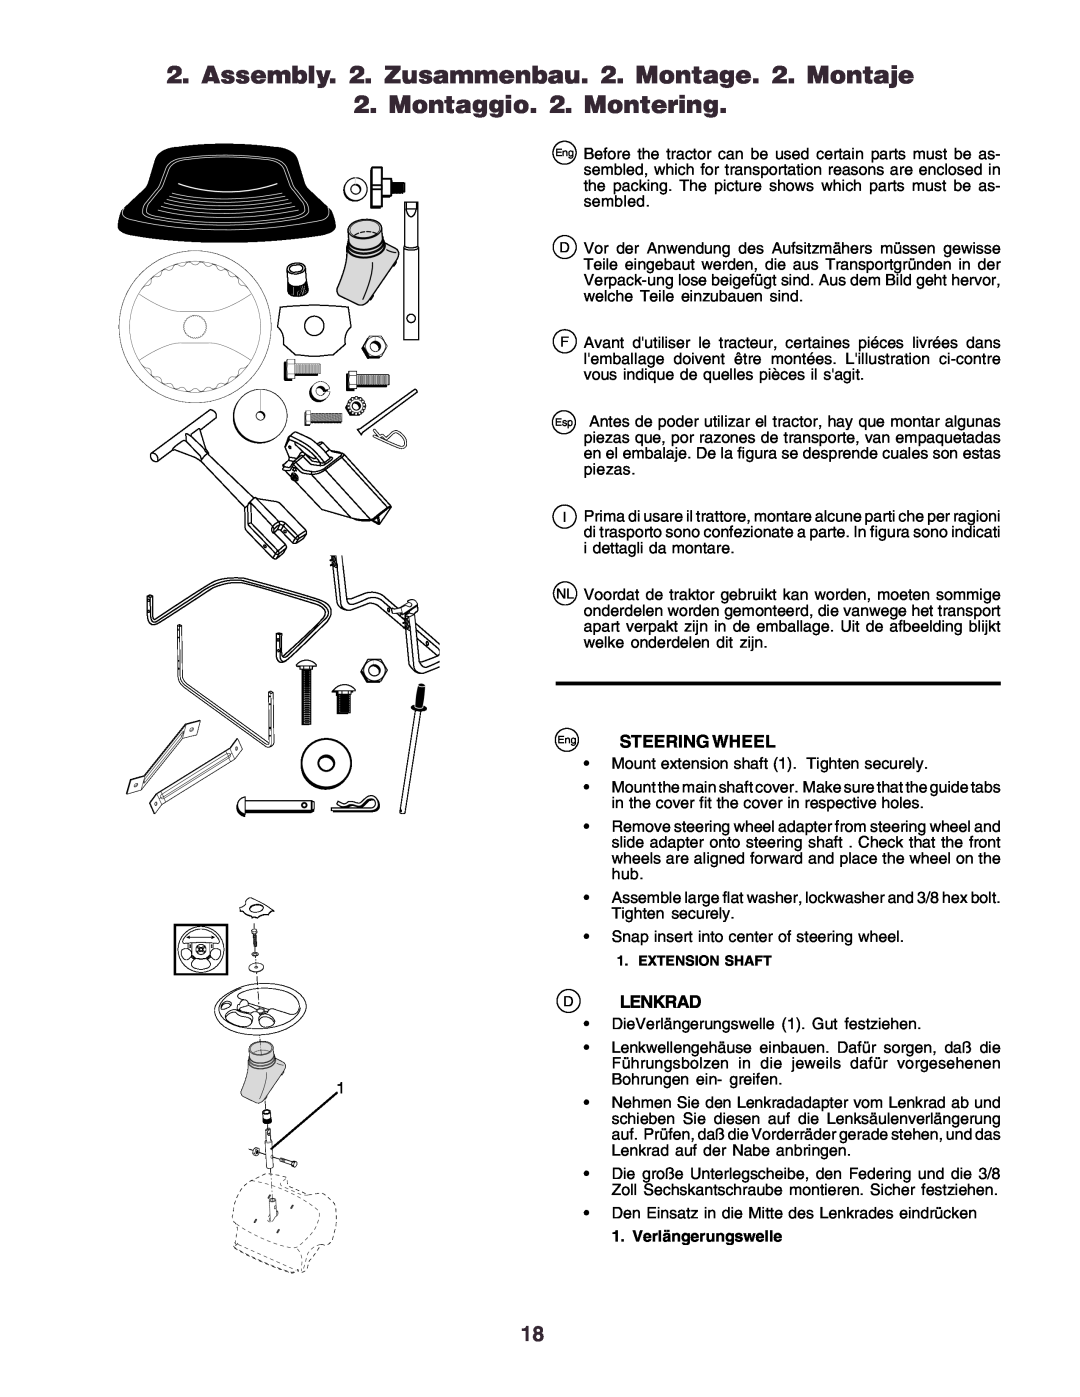 Husqvarna CT160 instruction manual Montaggio. 2. Montering, Eng STEERING WHEEL, Dlenkrad, Verlängerungswelle 